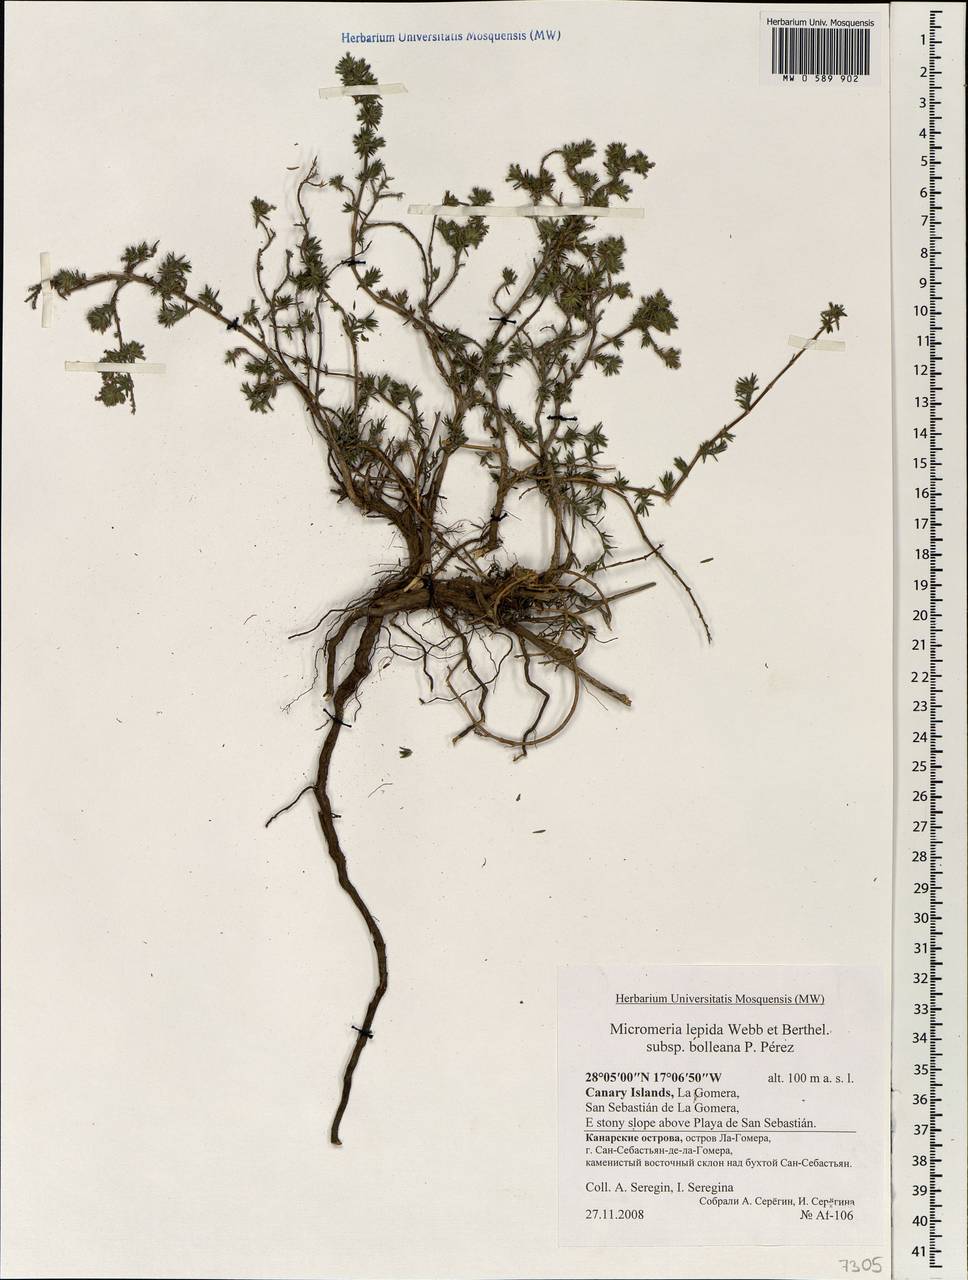 Micromeria lepida subsp. bolleana P.Perez, Африка (AFR) (Испания)